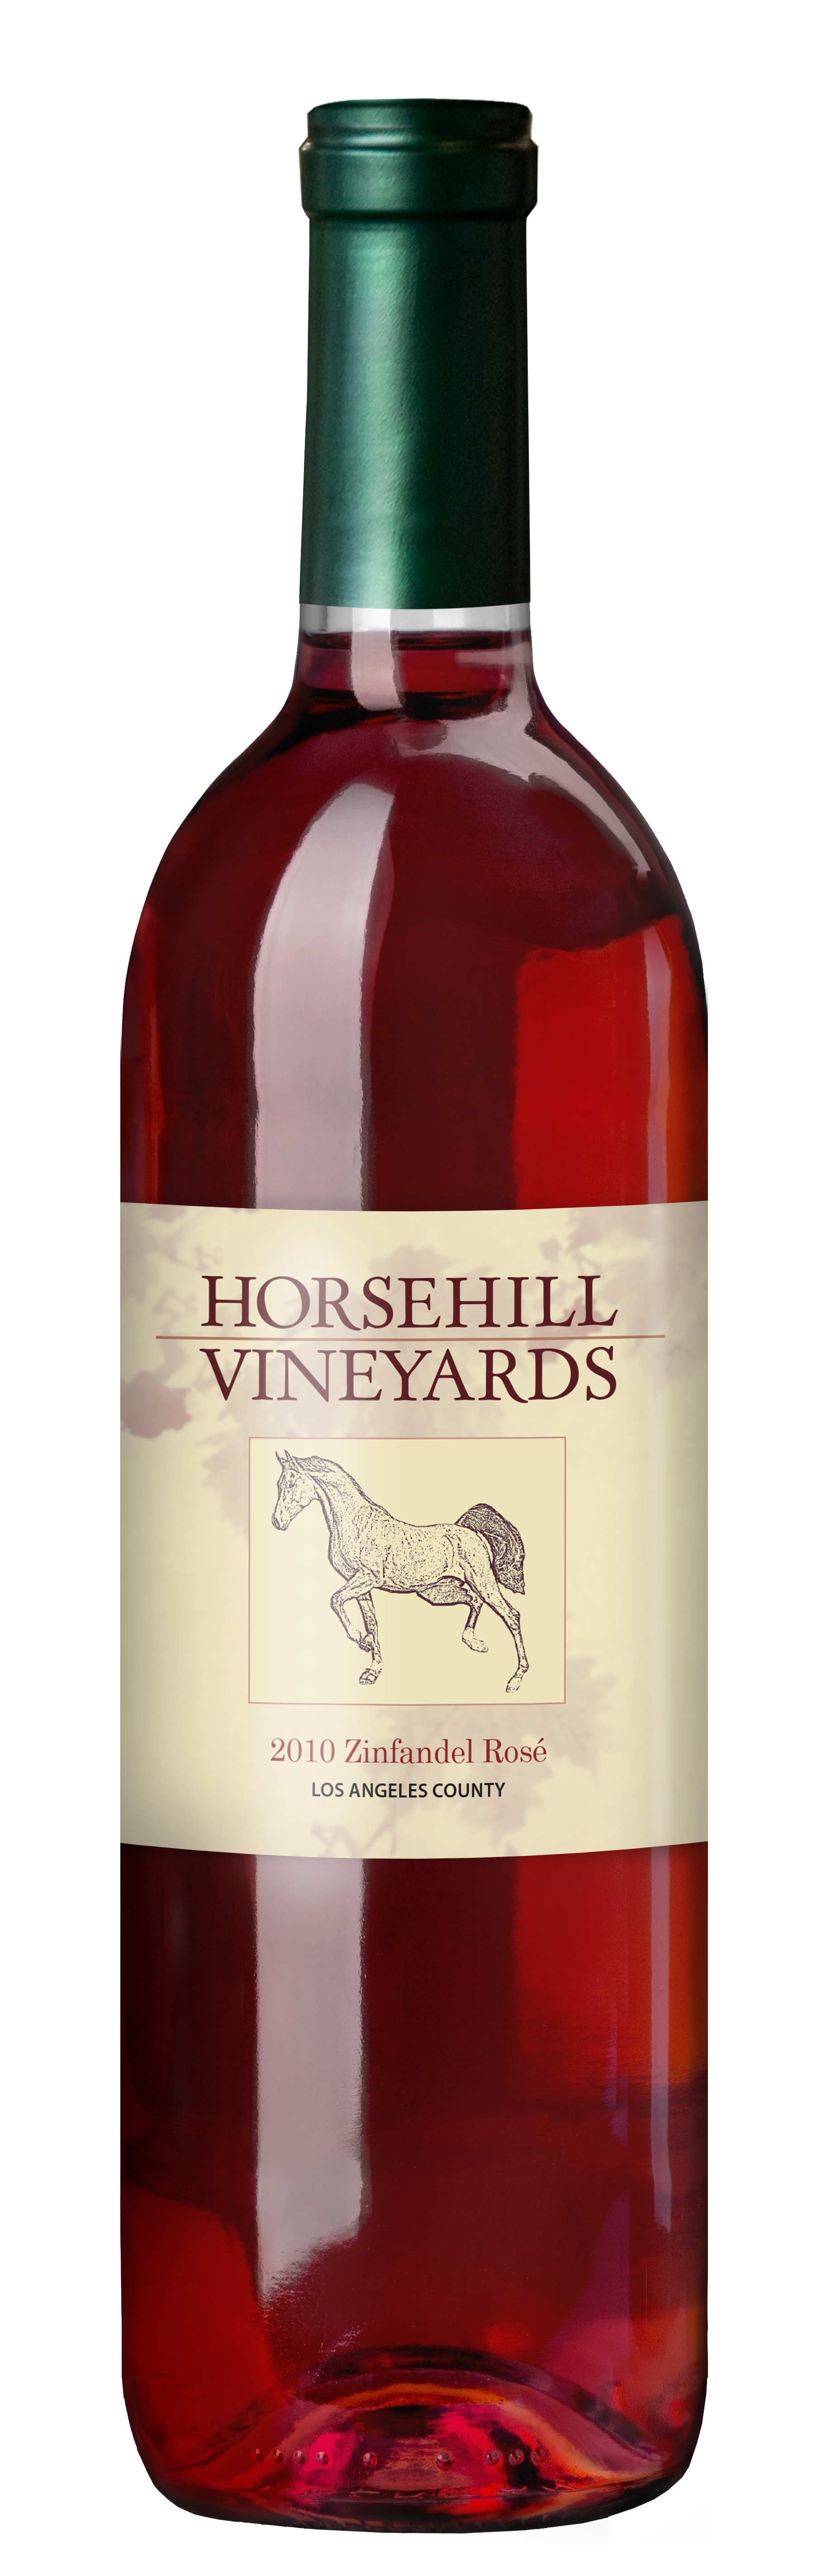 bottle of Horsehill Vineyards 2010 Zinfandel Rose